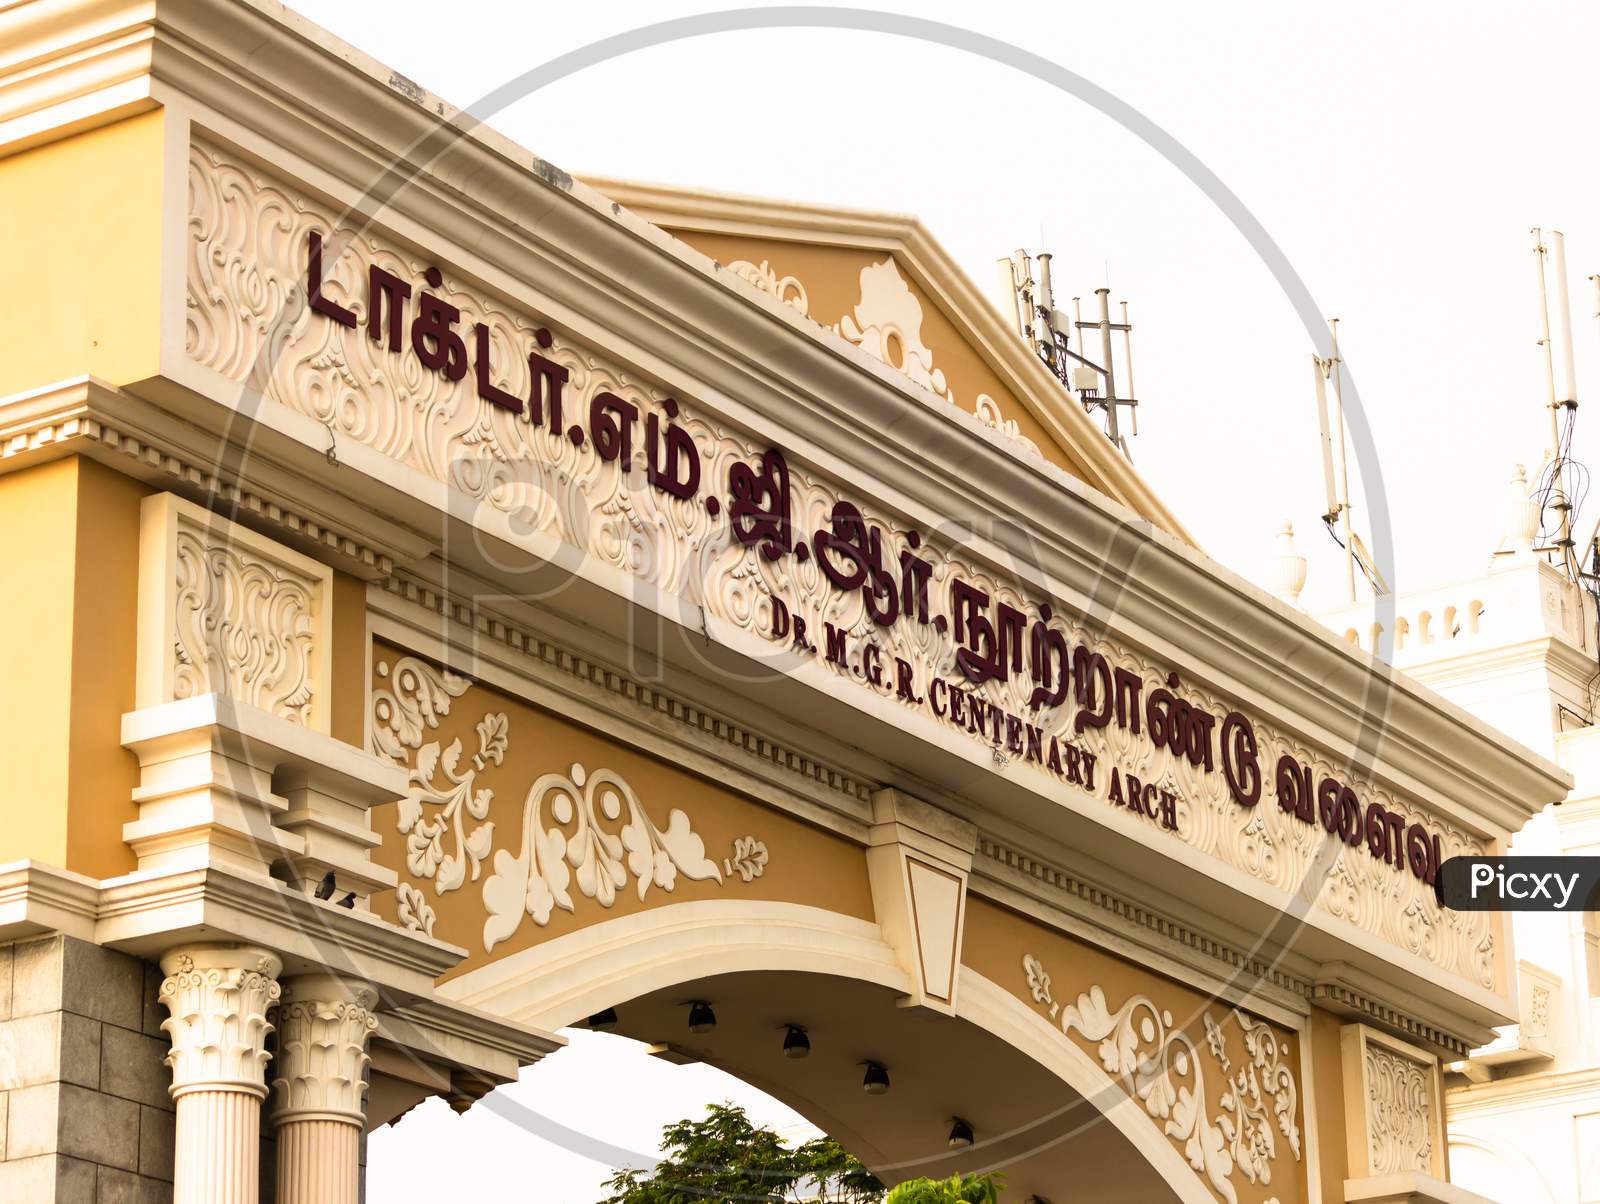 Chennai, Tamil Nadu, India - January 13 2021: View Of The Dr Mgr Centenary Arch Along Marina Beach, Chennai, Tamil Nadu, India